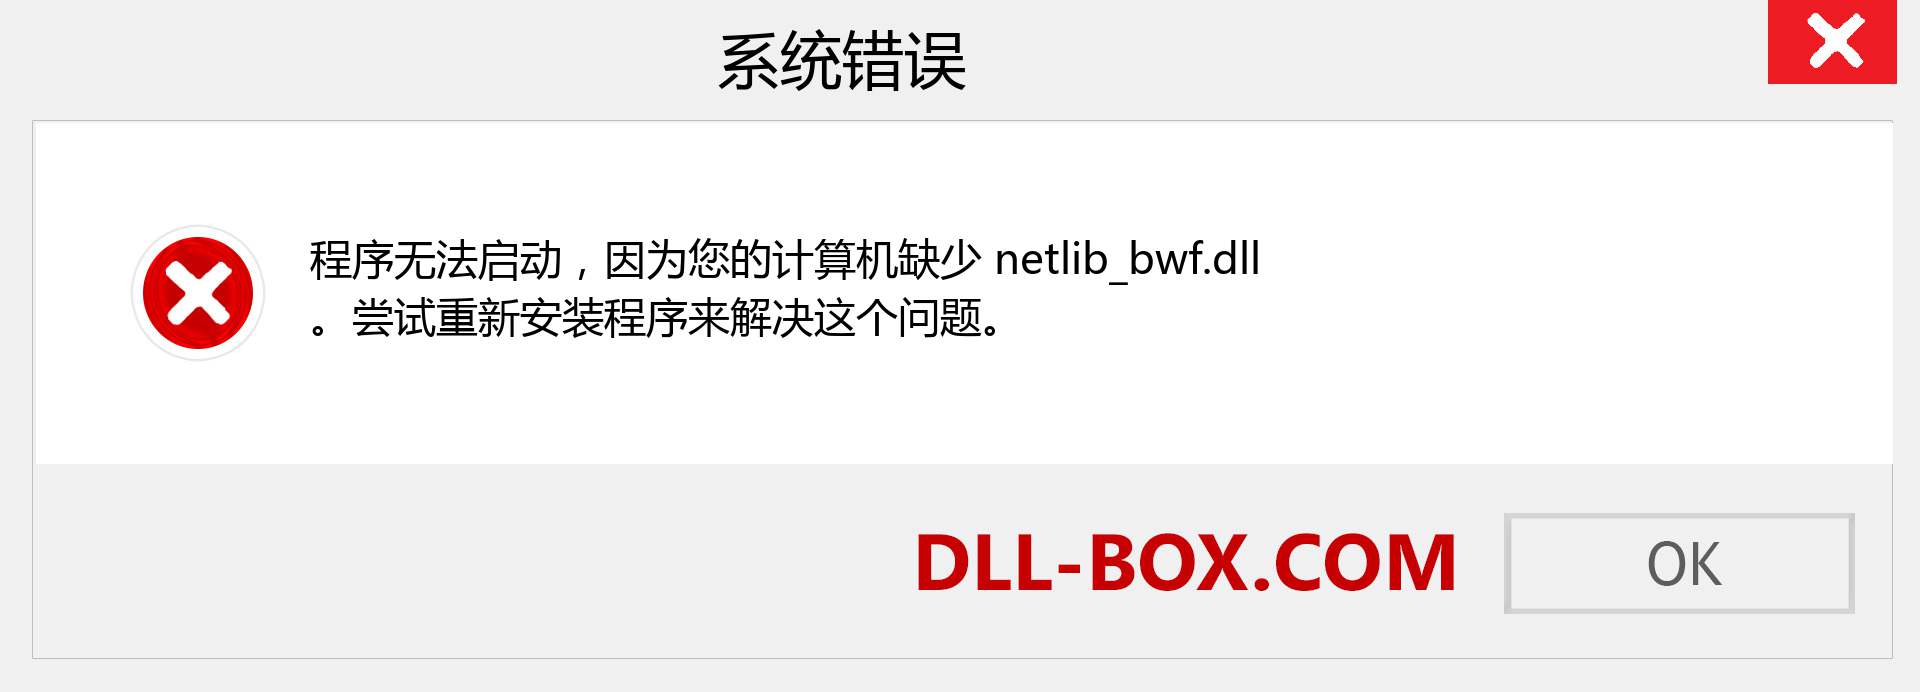 netlib_bwf.dll 文件丢失？。 适用于 Windows 7、8、10 的下载 - 修复 Windows、照片、图像上的 netlib_bwf dll 丢失错误